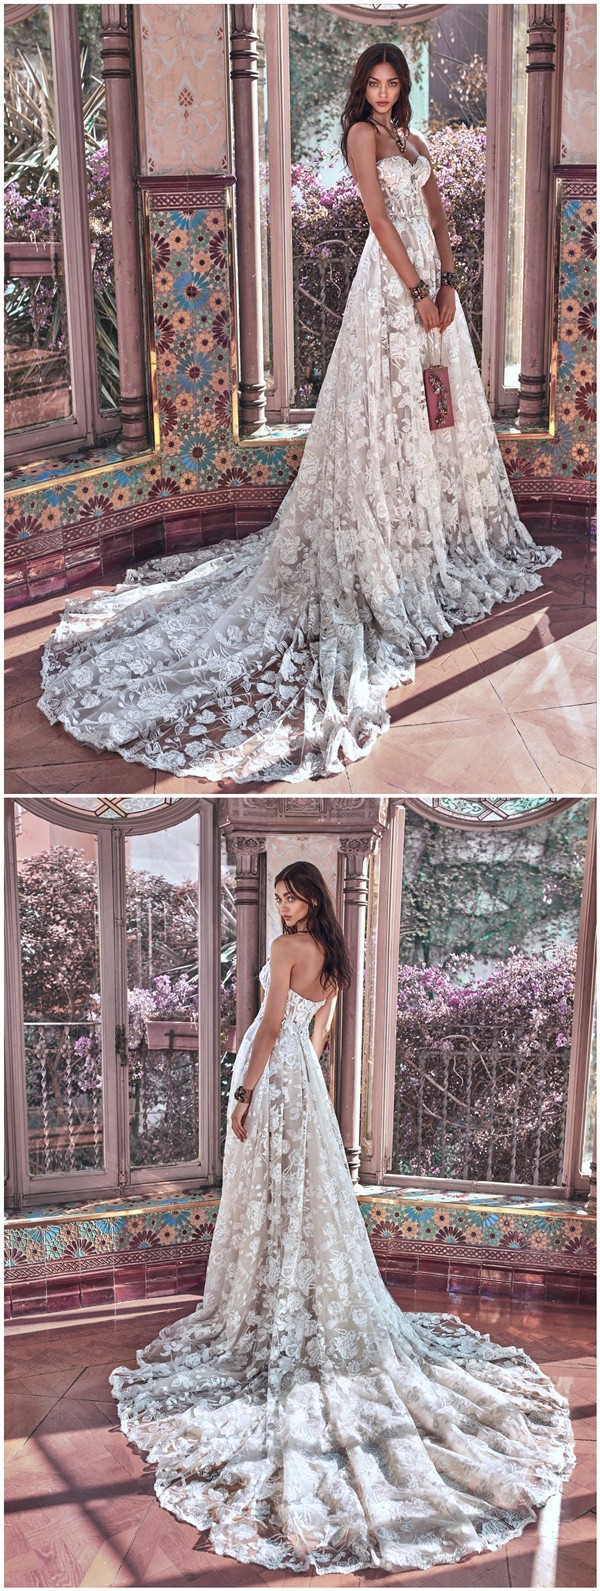 Galia Lahav Wedding Dresses 2018 Victorian Affinity Collection - Georgia